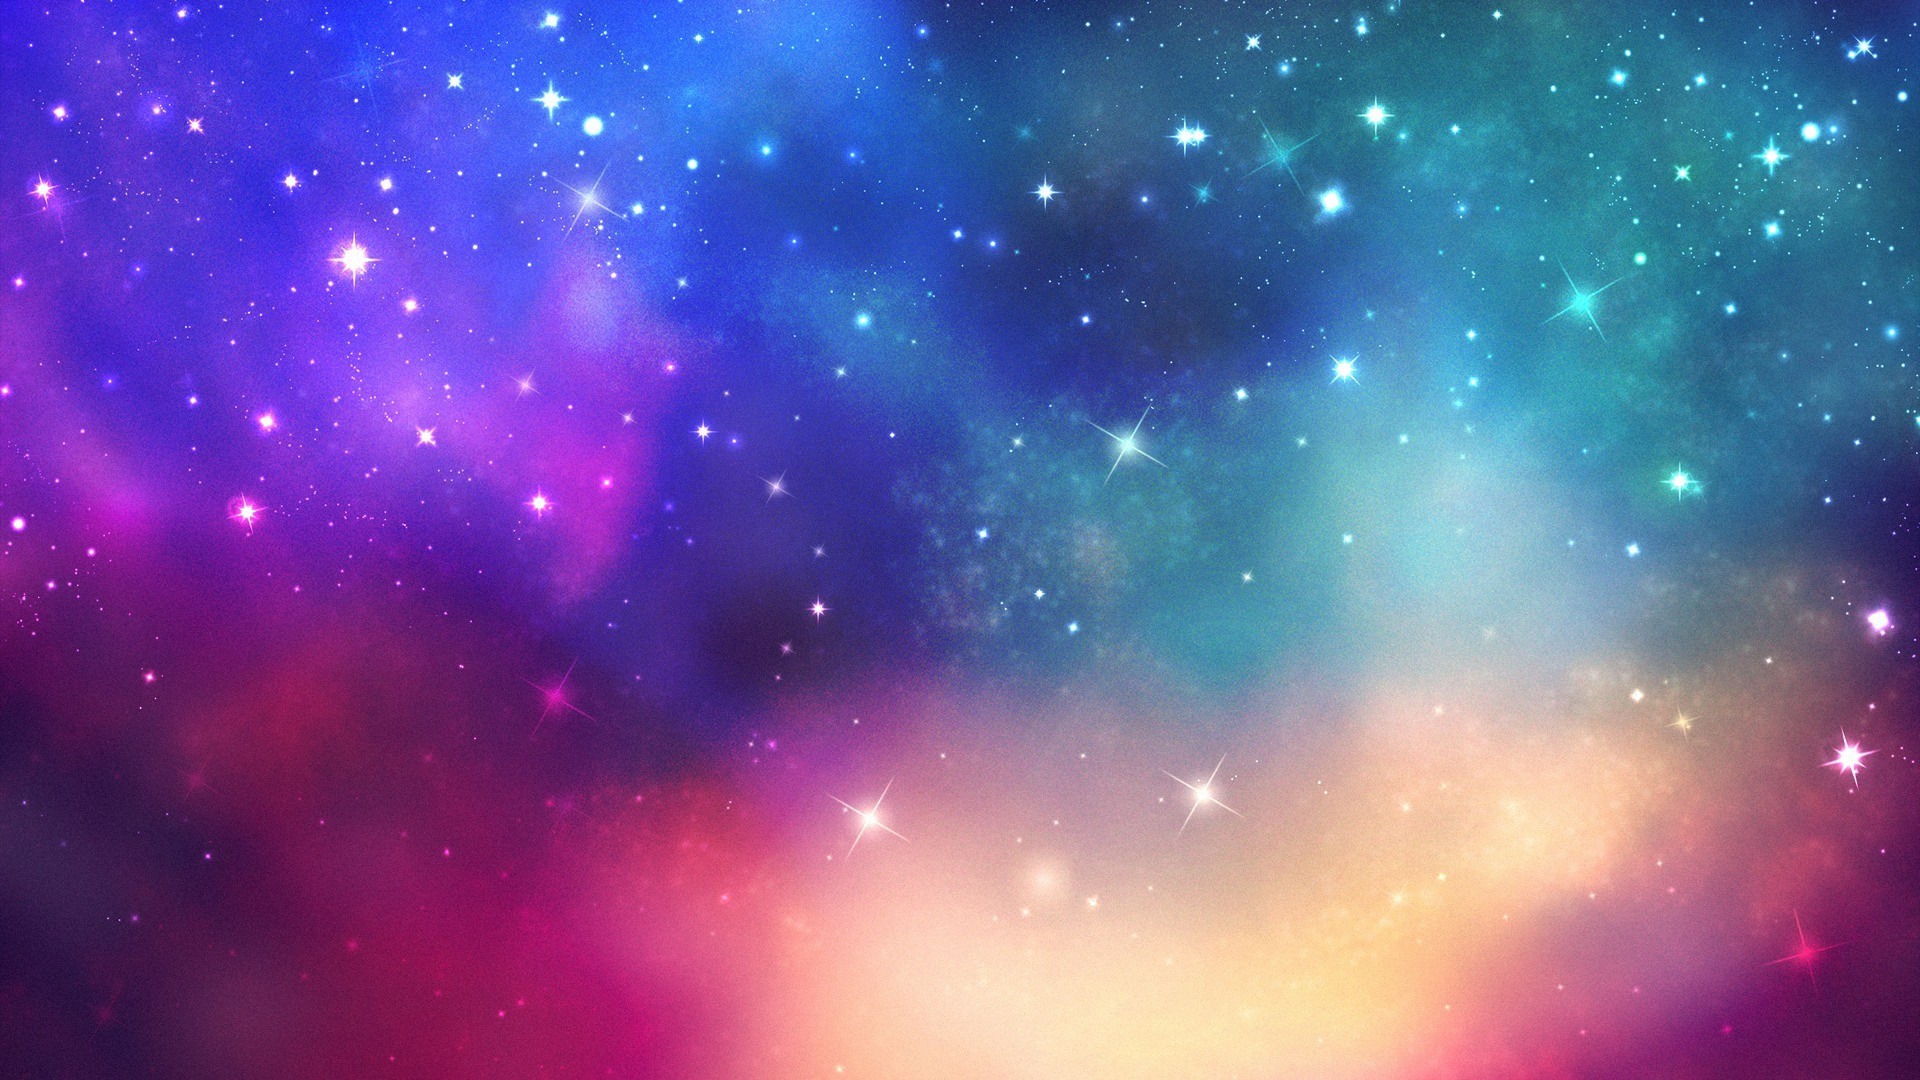 Beautiful Galaxy Backgrounds Tumblr